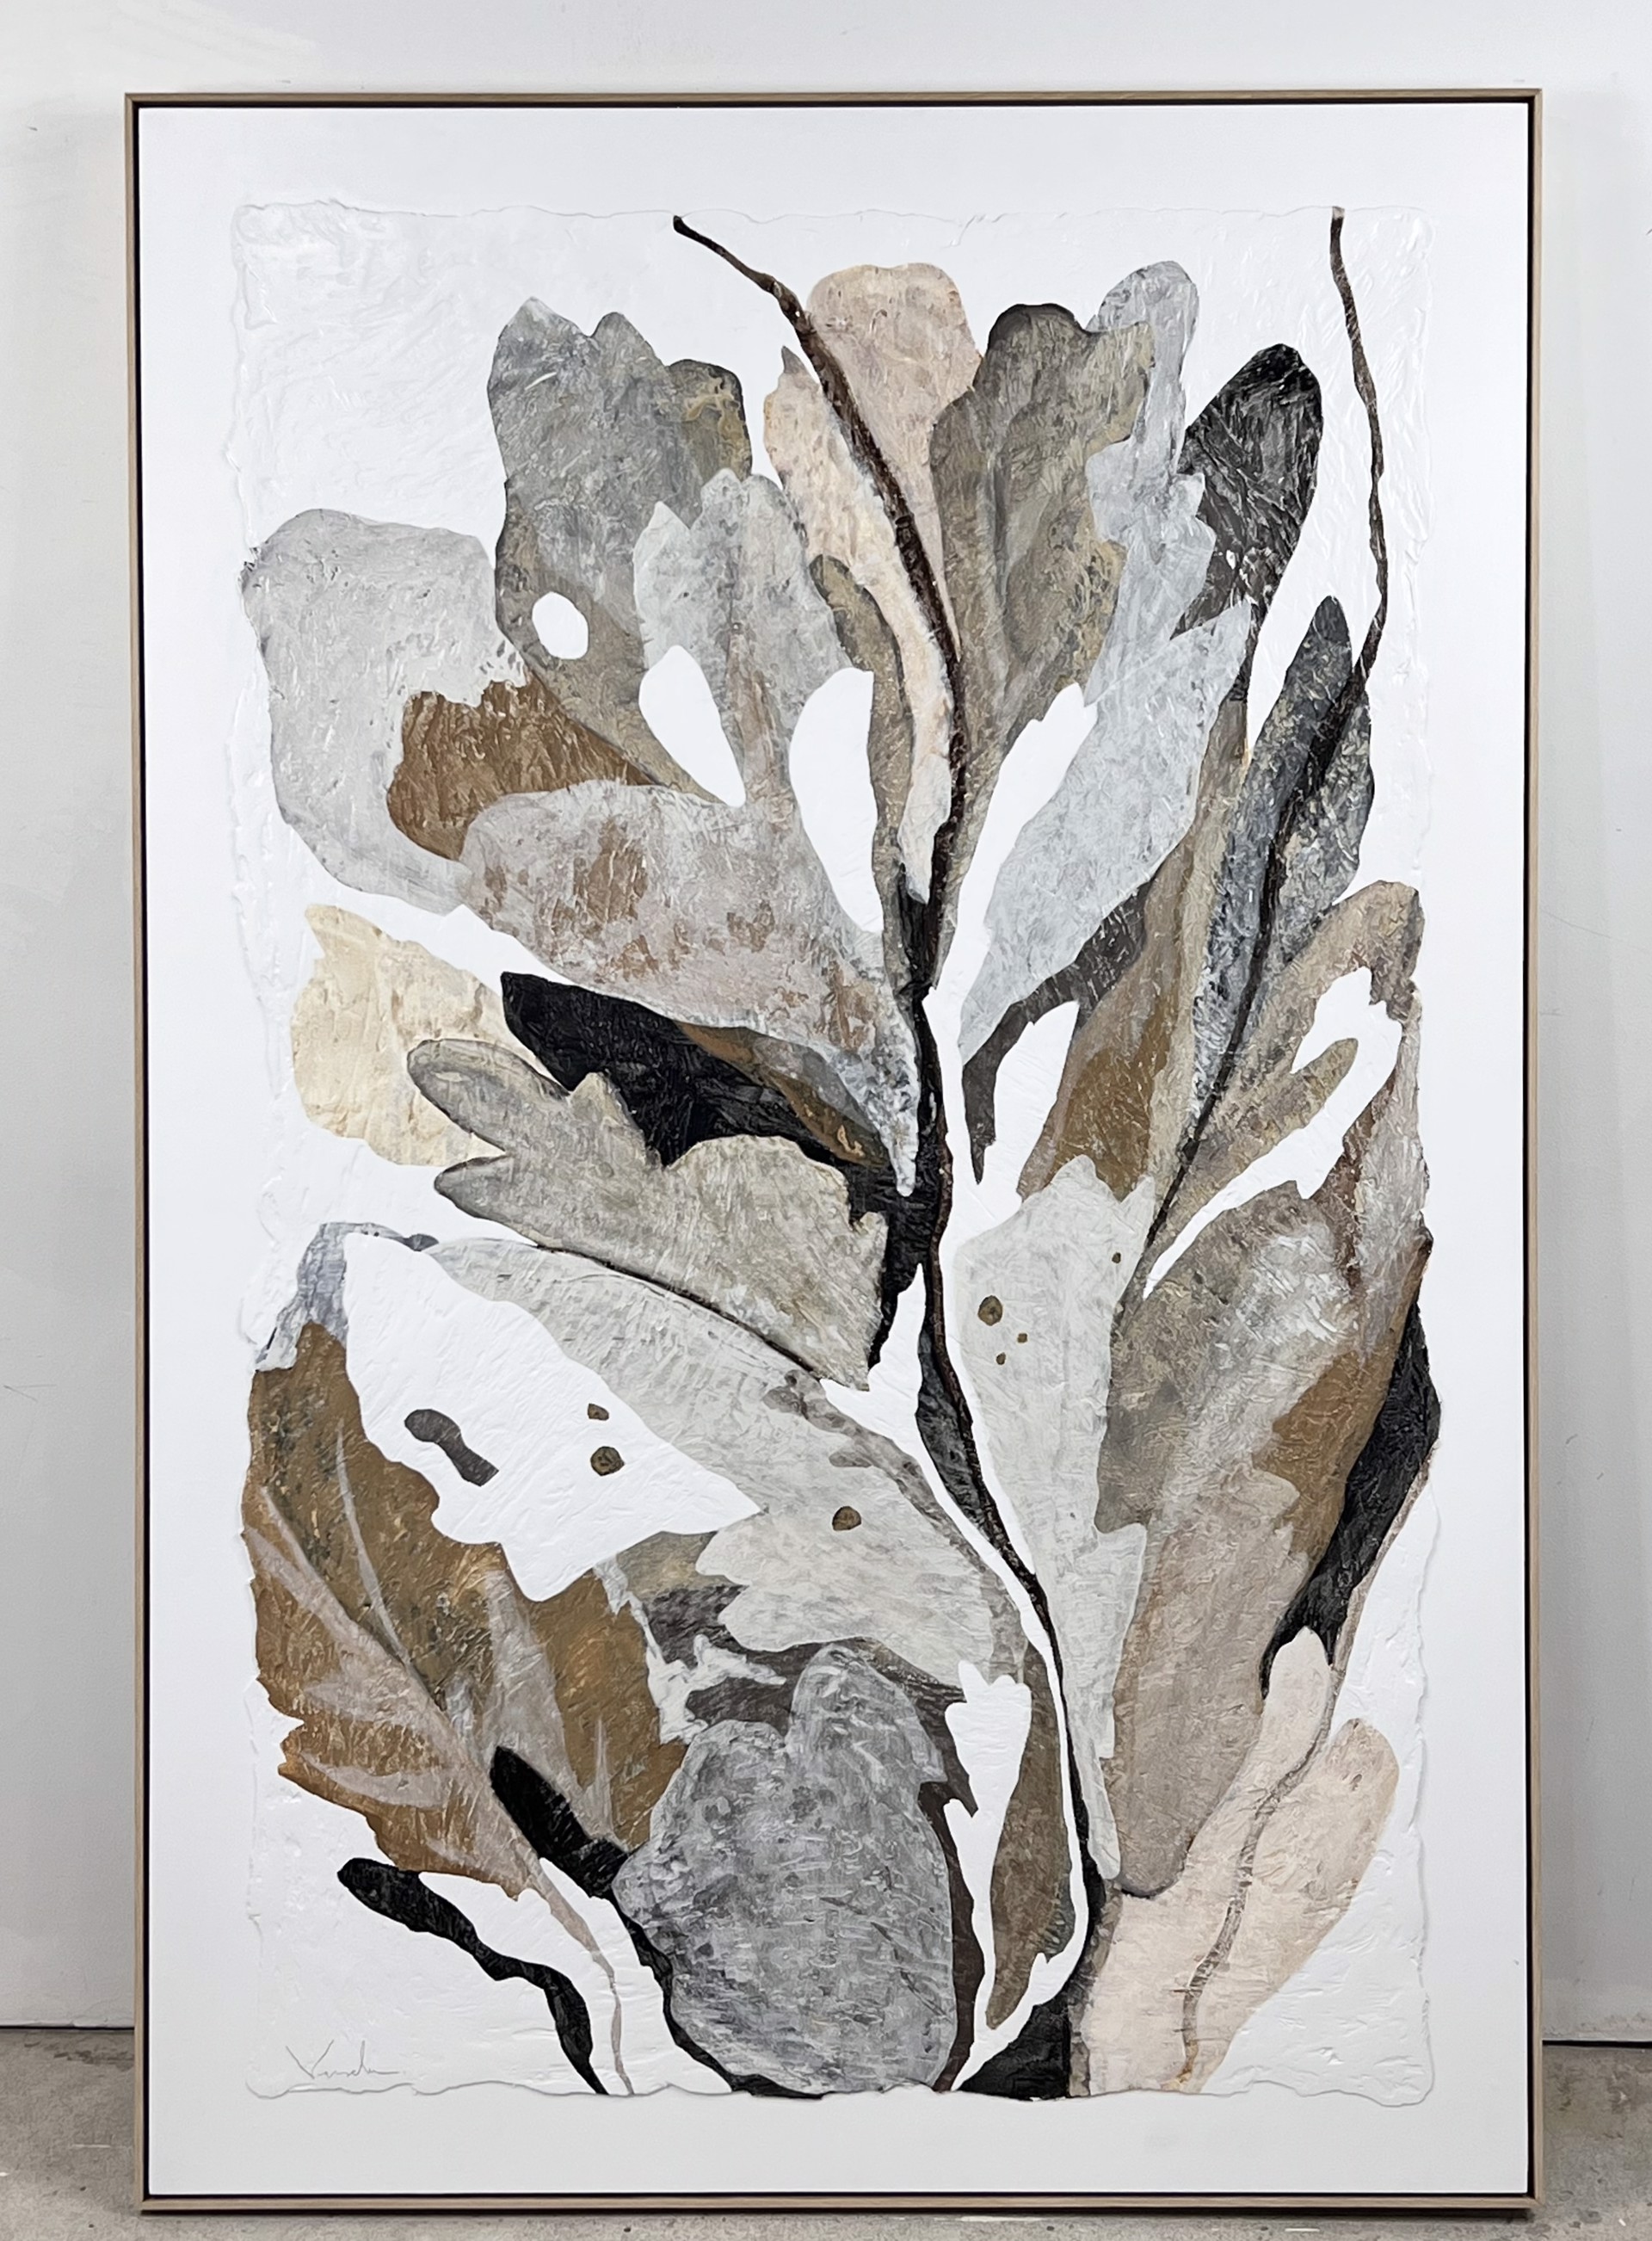 Leaves Falling by Vesela Baker